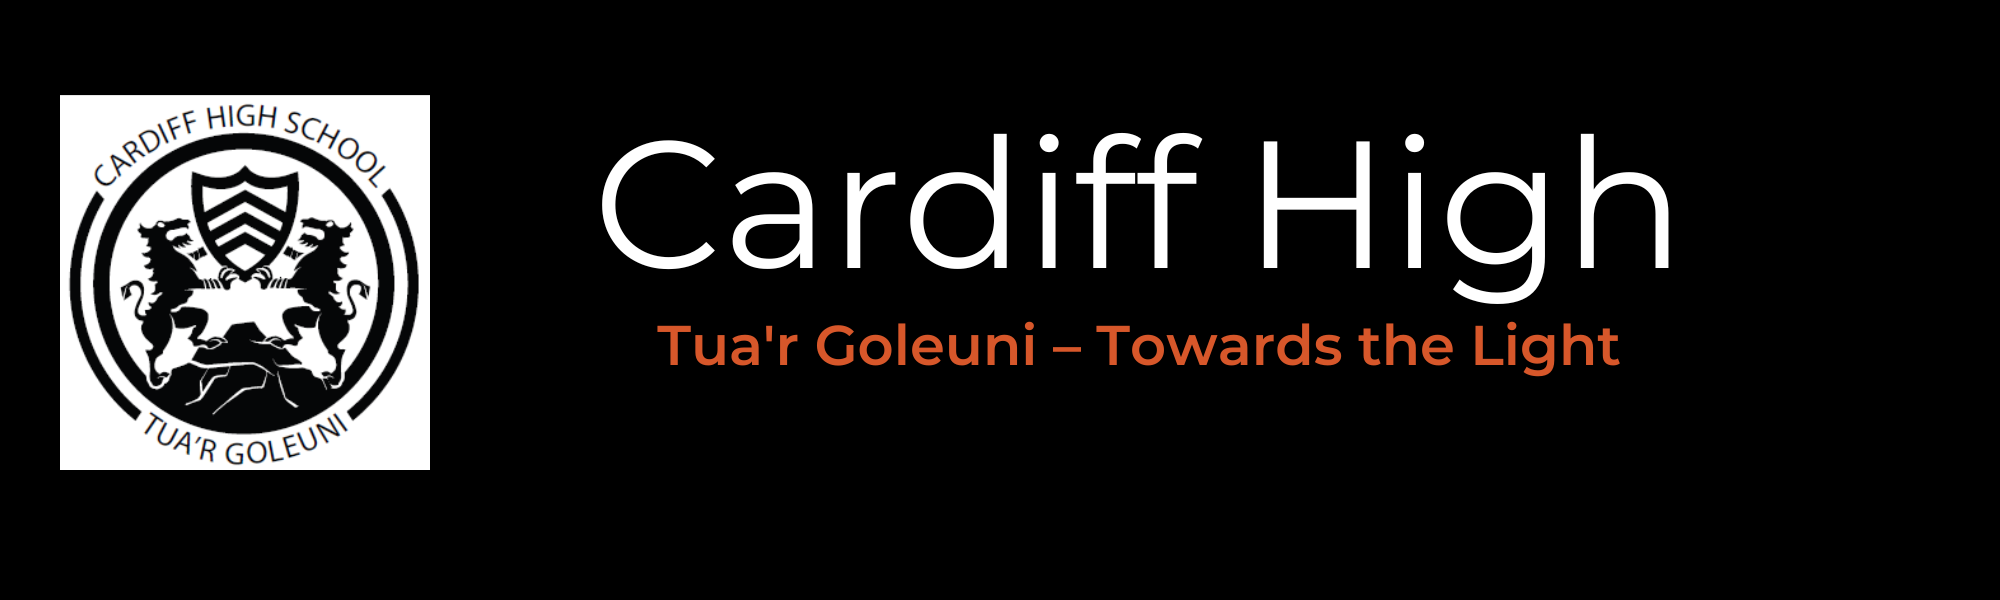 Cardiff High Banner